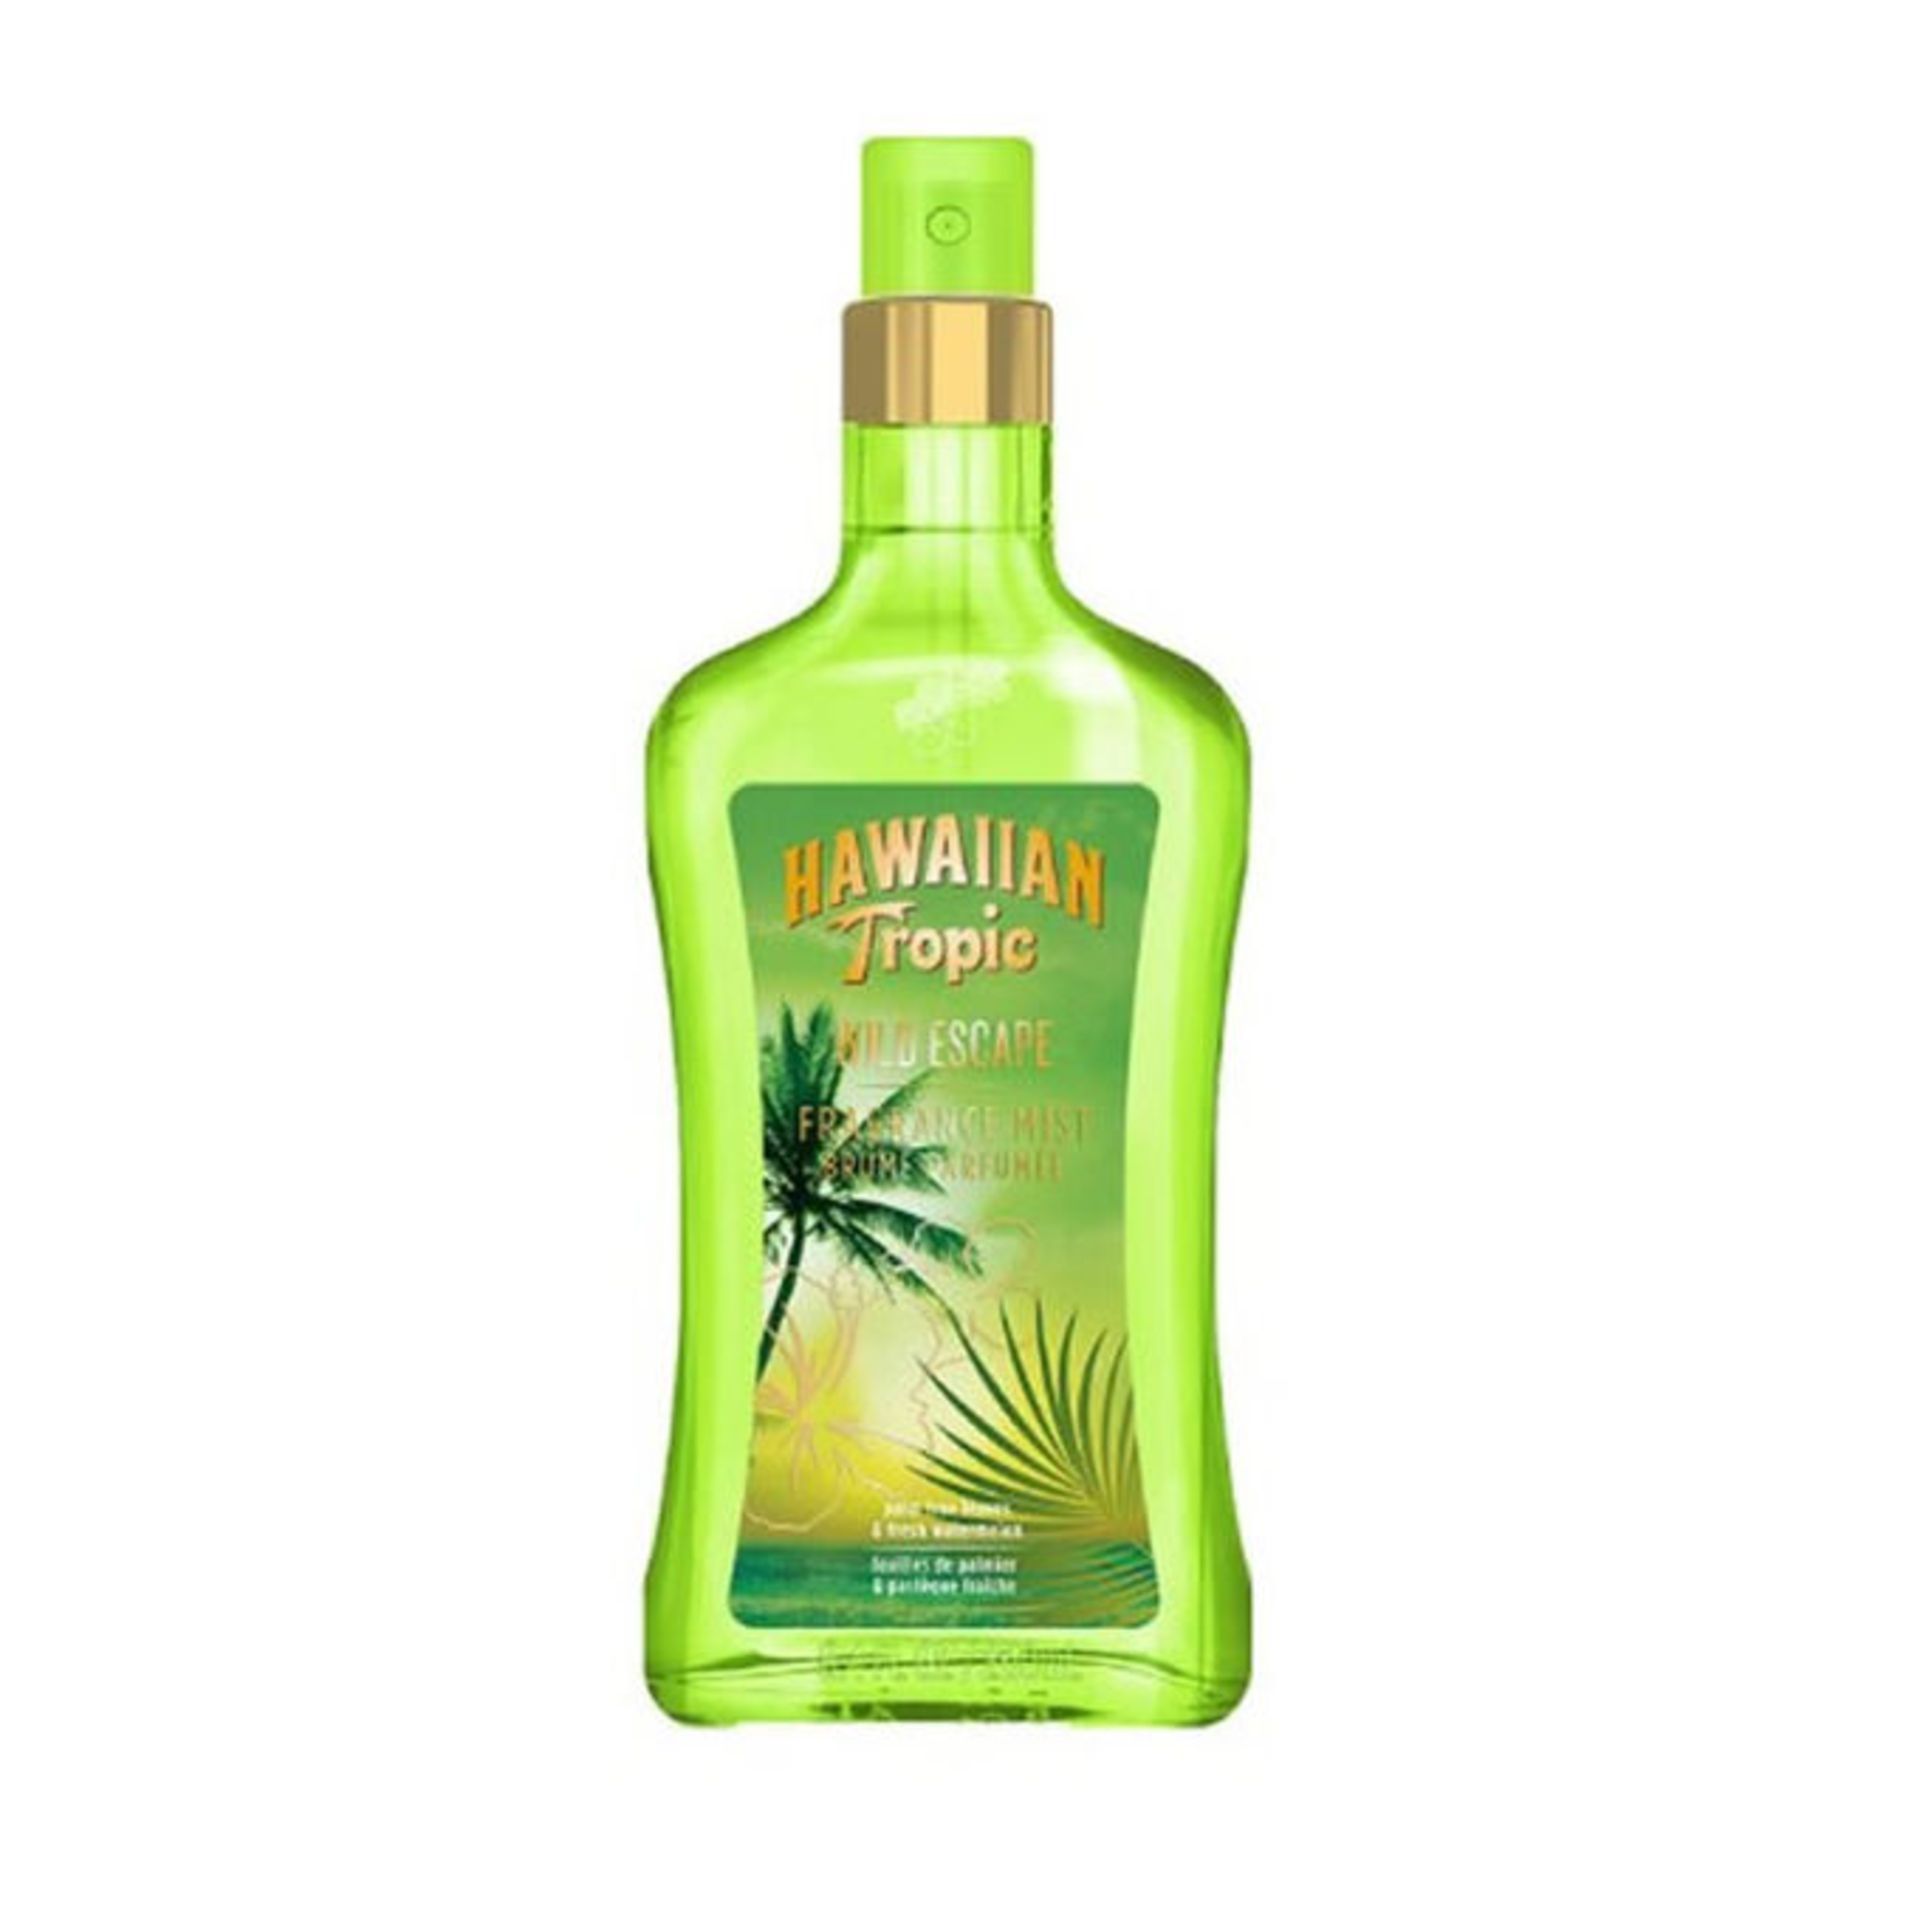 + VAT Brand New Hawaiian Tropic Wild Escape Body Mist 250ml